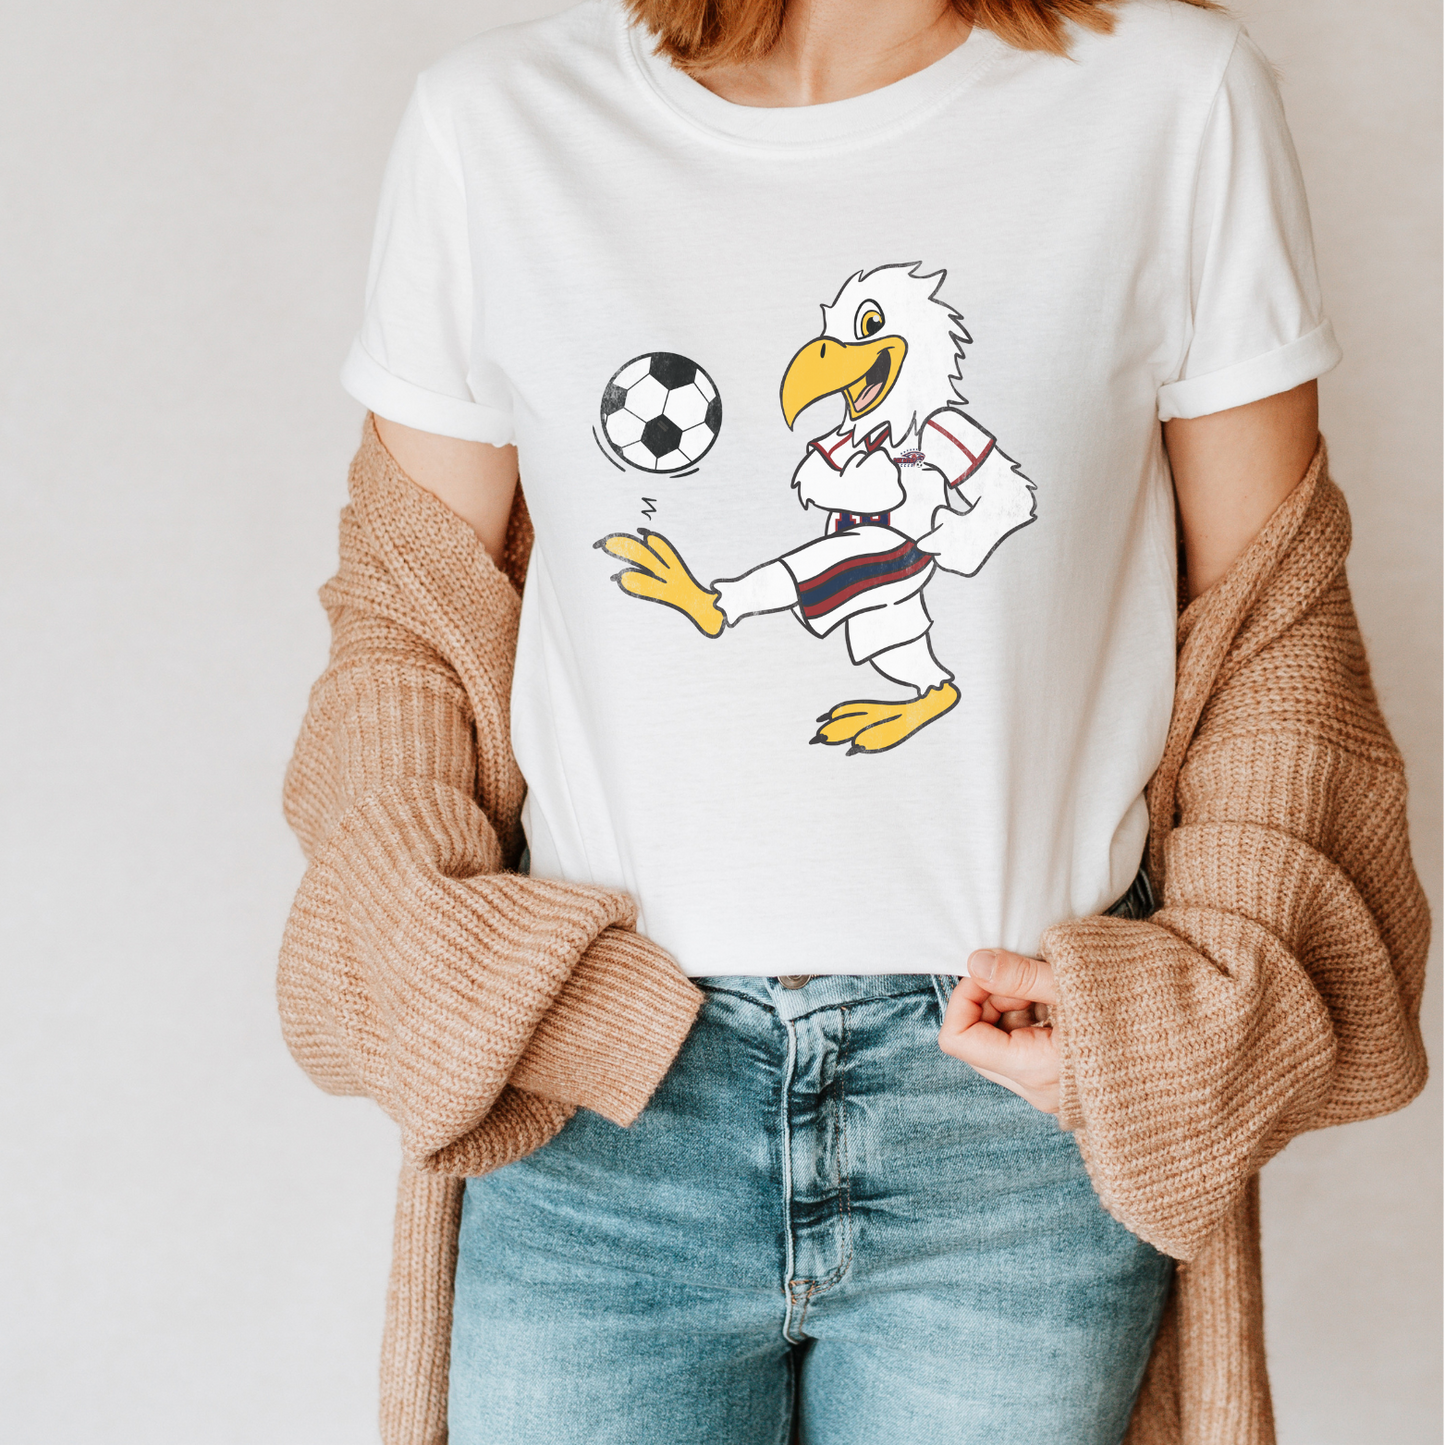 Let’s play Soccer